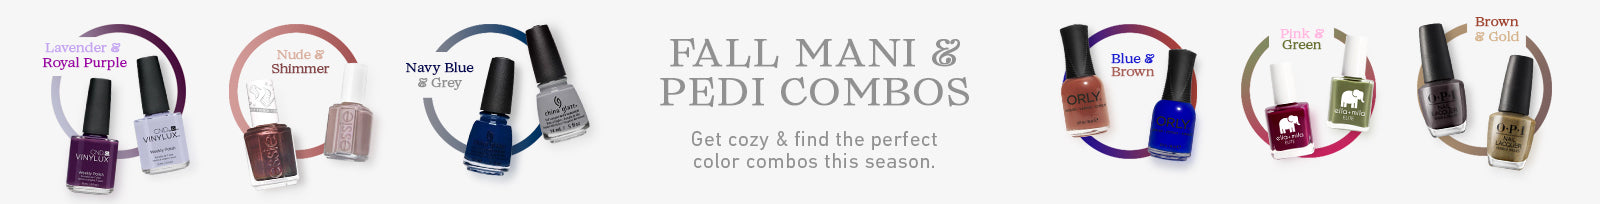 Fall Mani & Pedi Combos